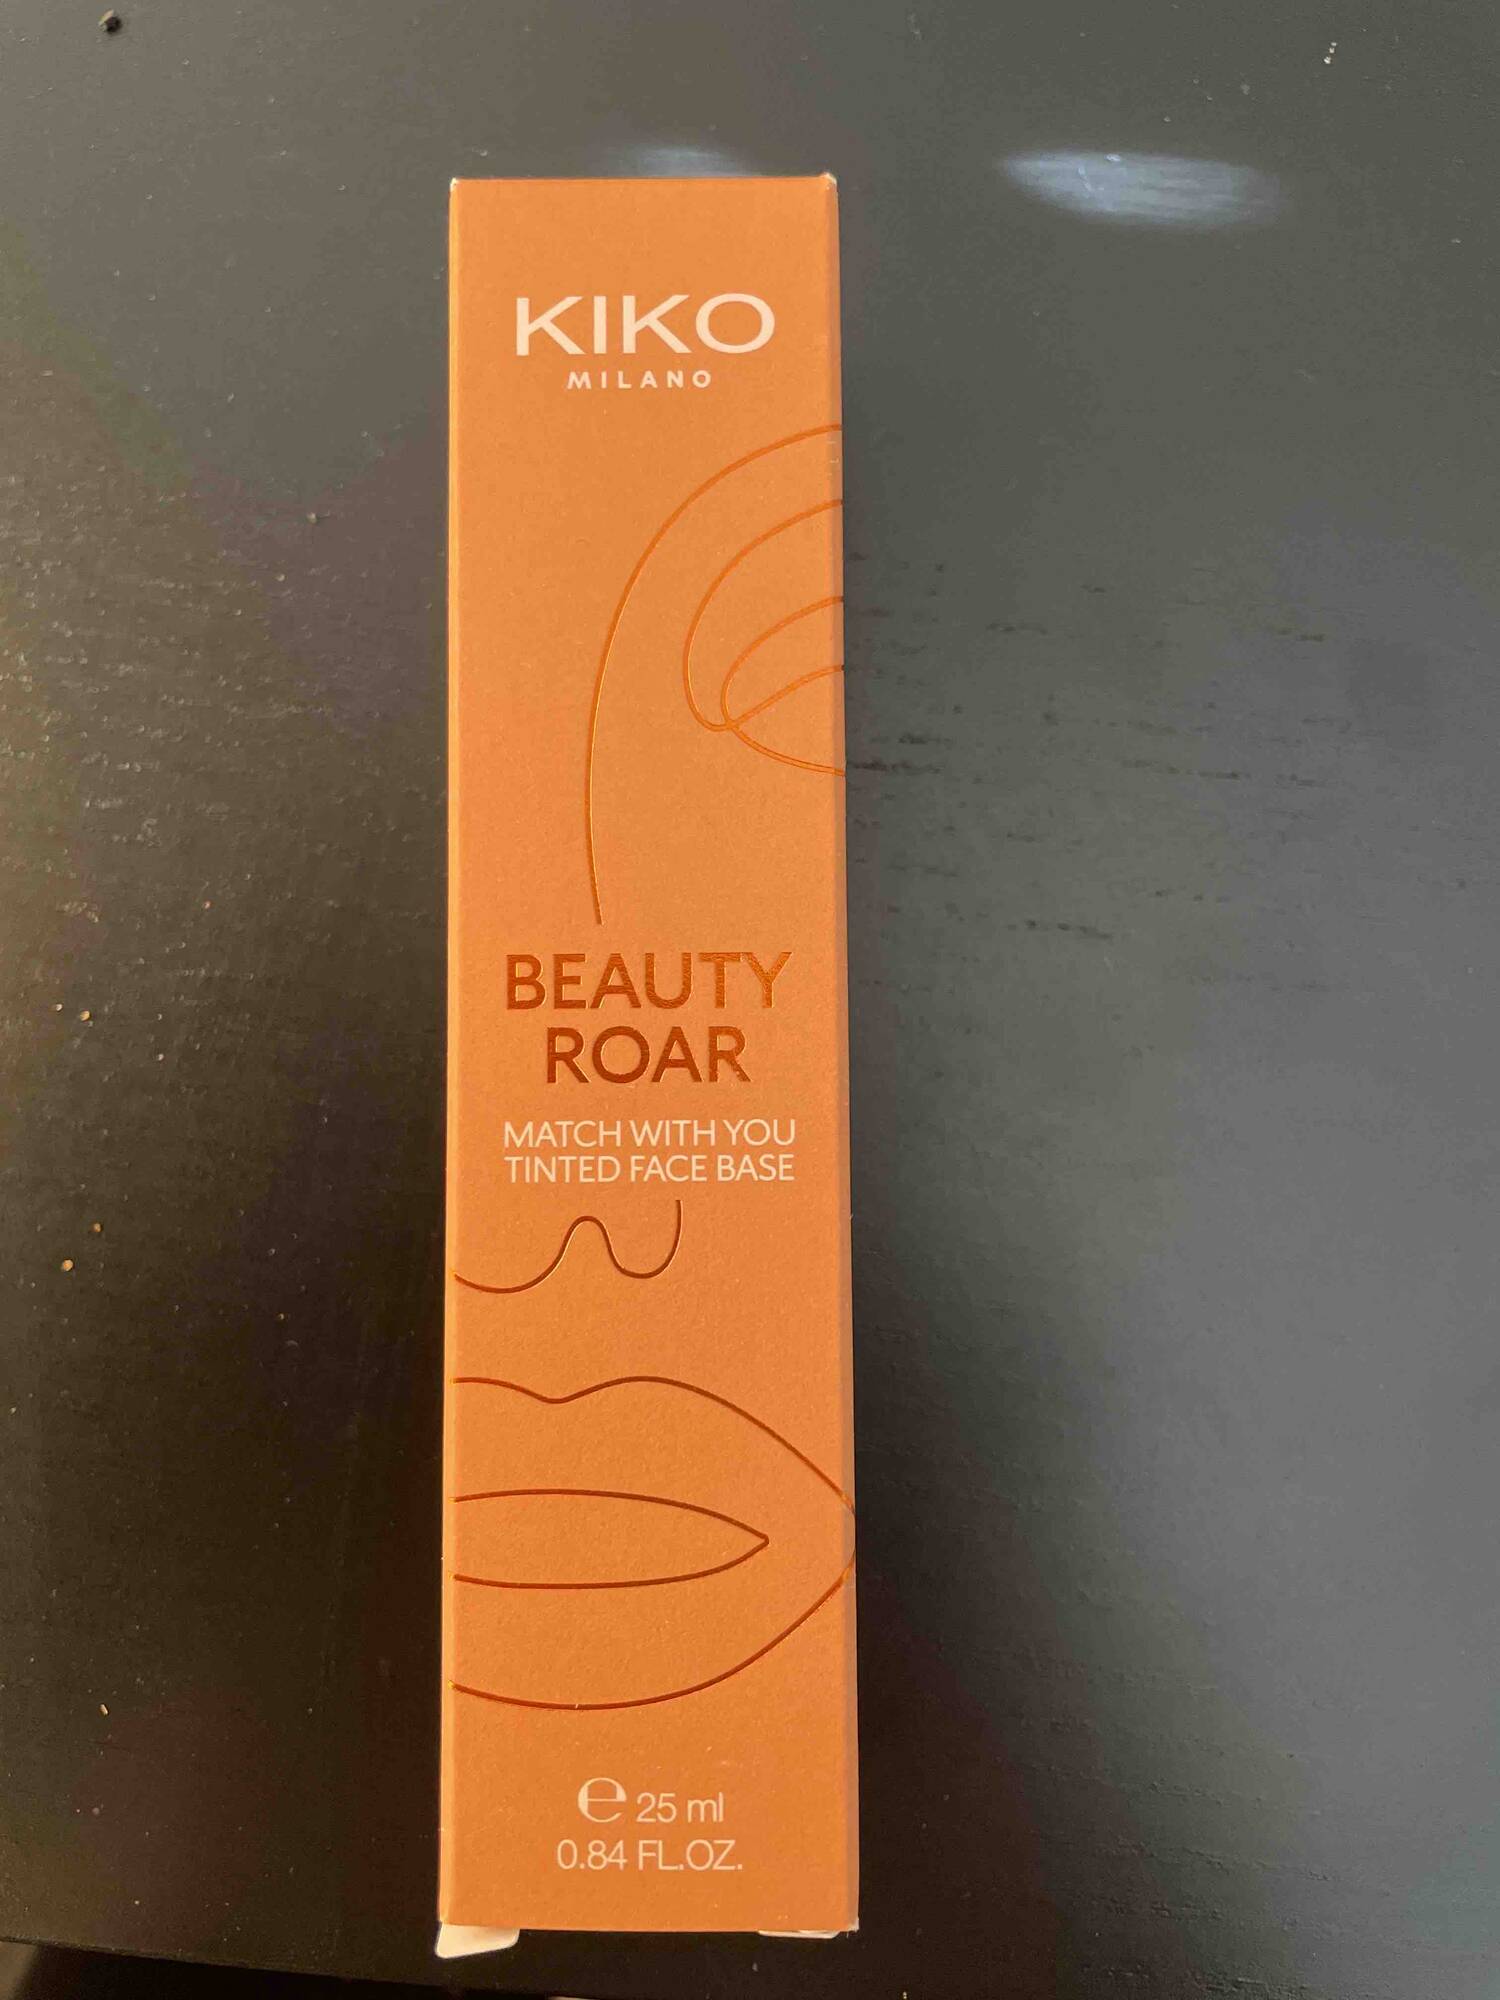 KIKO MILANO - Beauty roar - Match with you tinted face base